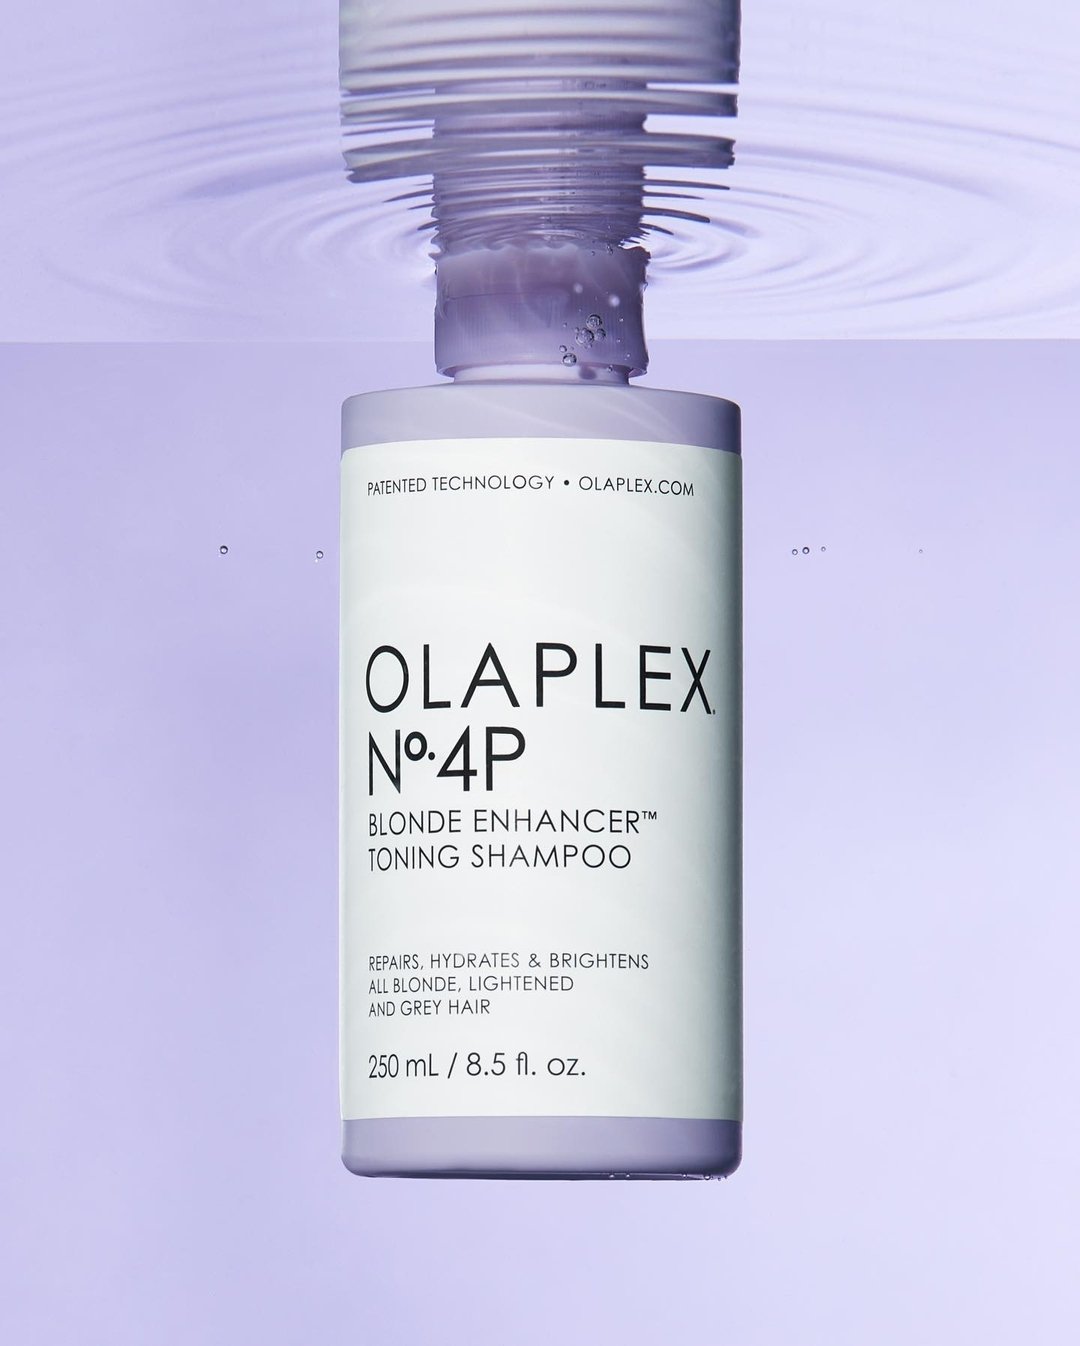 Olaplex Blonde Enhancer Toning Shampoo 
@dimesalonhfx
.